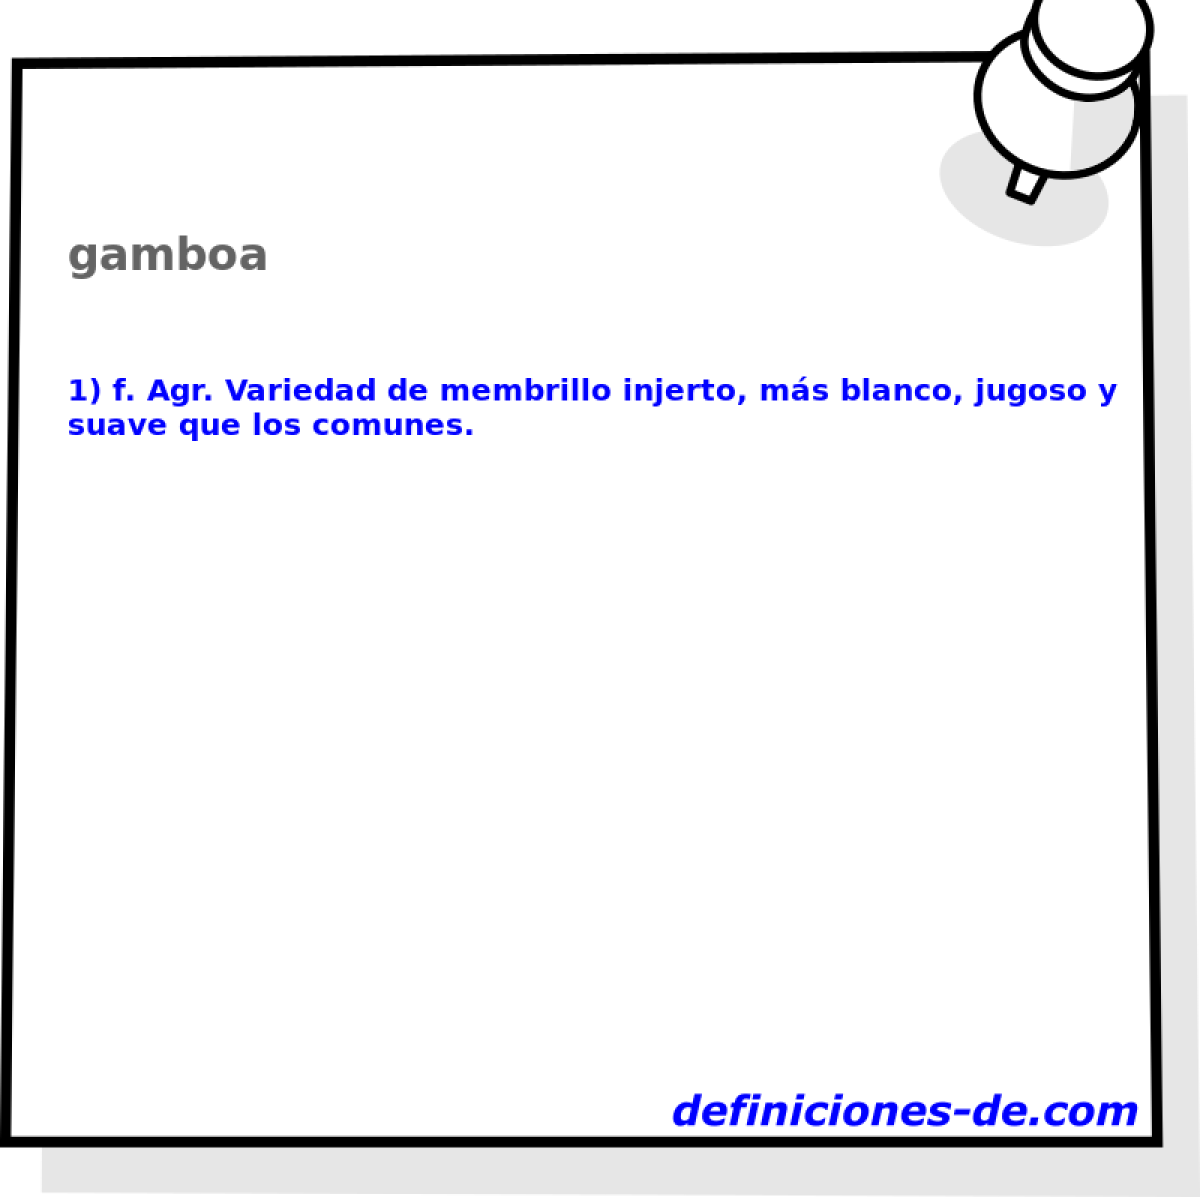 gamboa 